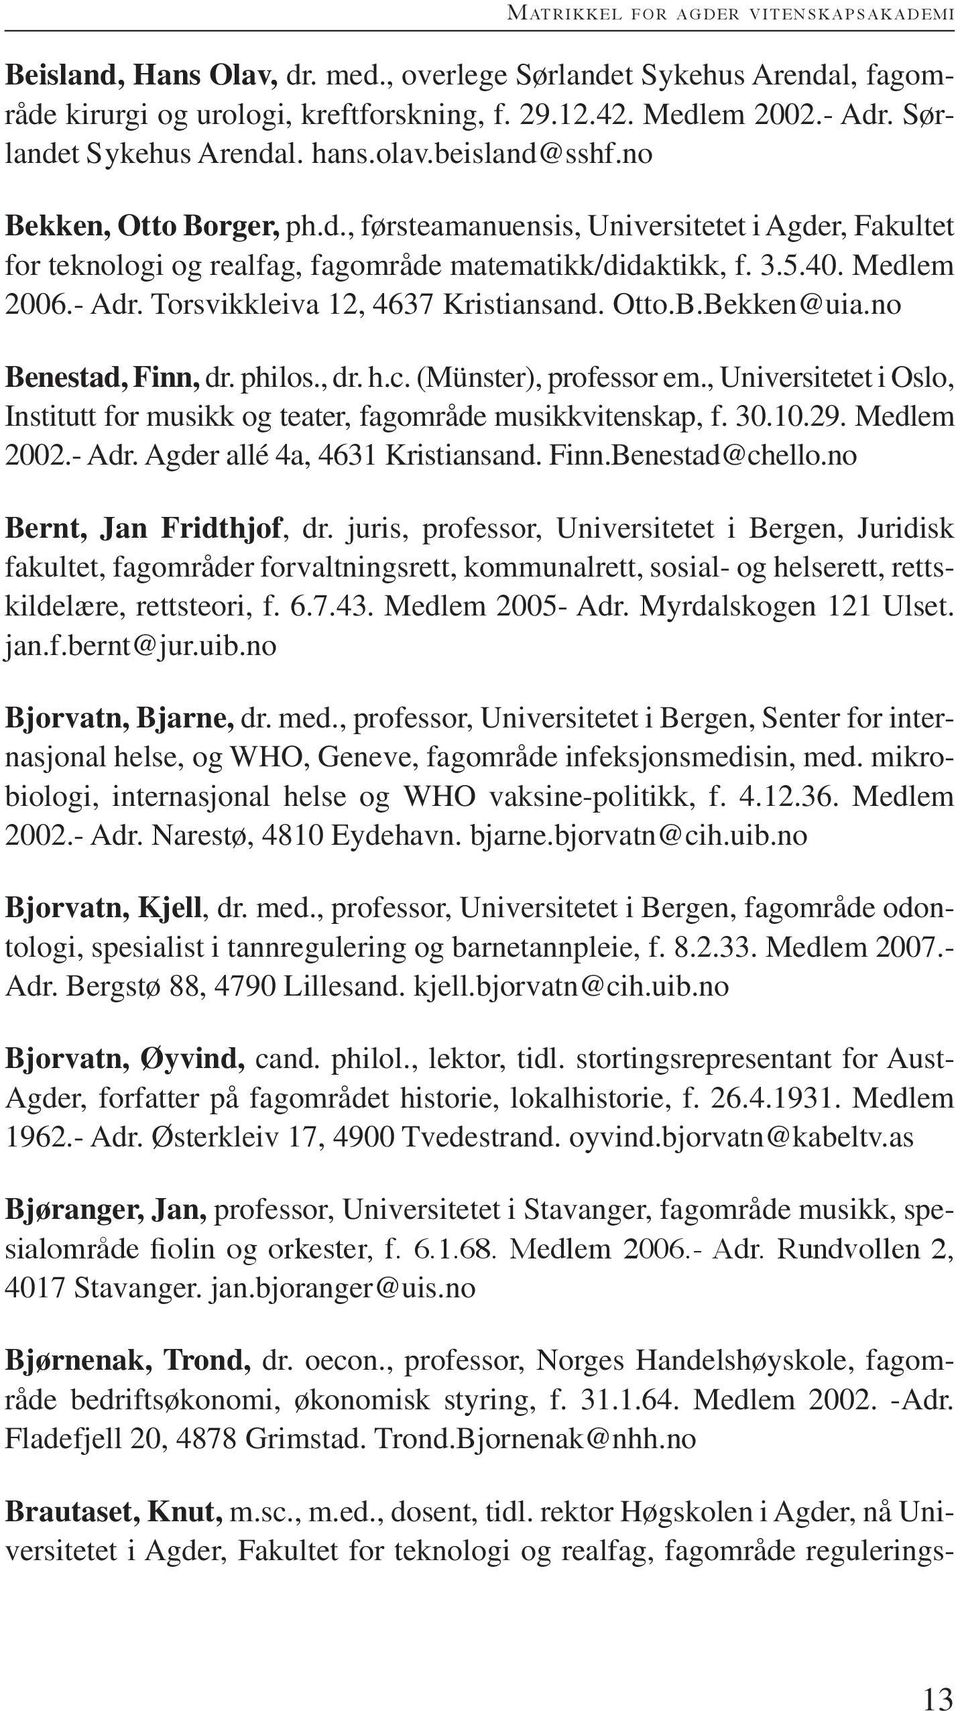 Medlem 2006.- Adr. Torsvikkleiva 12, 4637 Kristiansand. Otto.B.Bekken@uia.no benestad, finn, dr. philos., dr. h.c. (Münster), professor em.